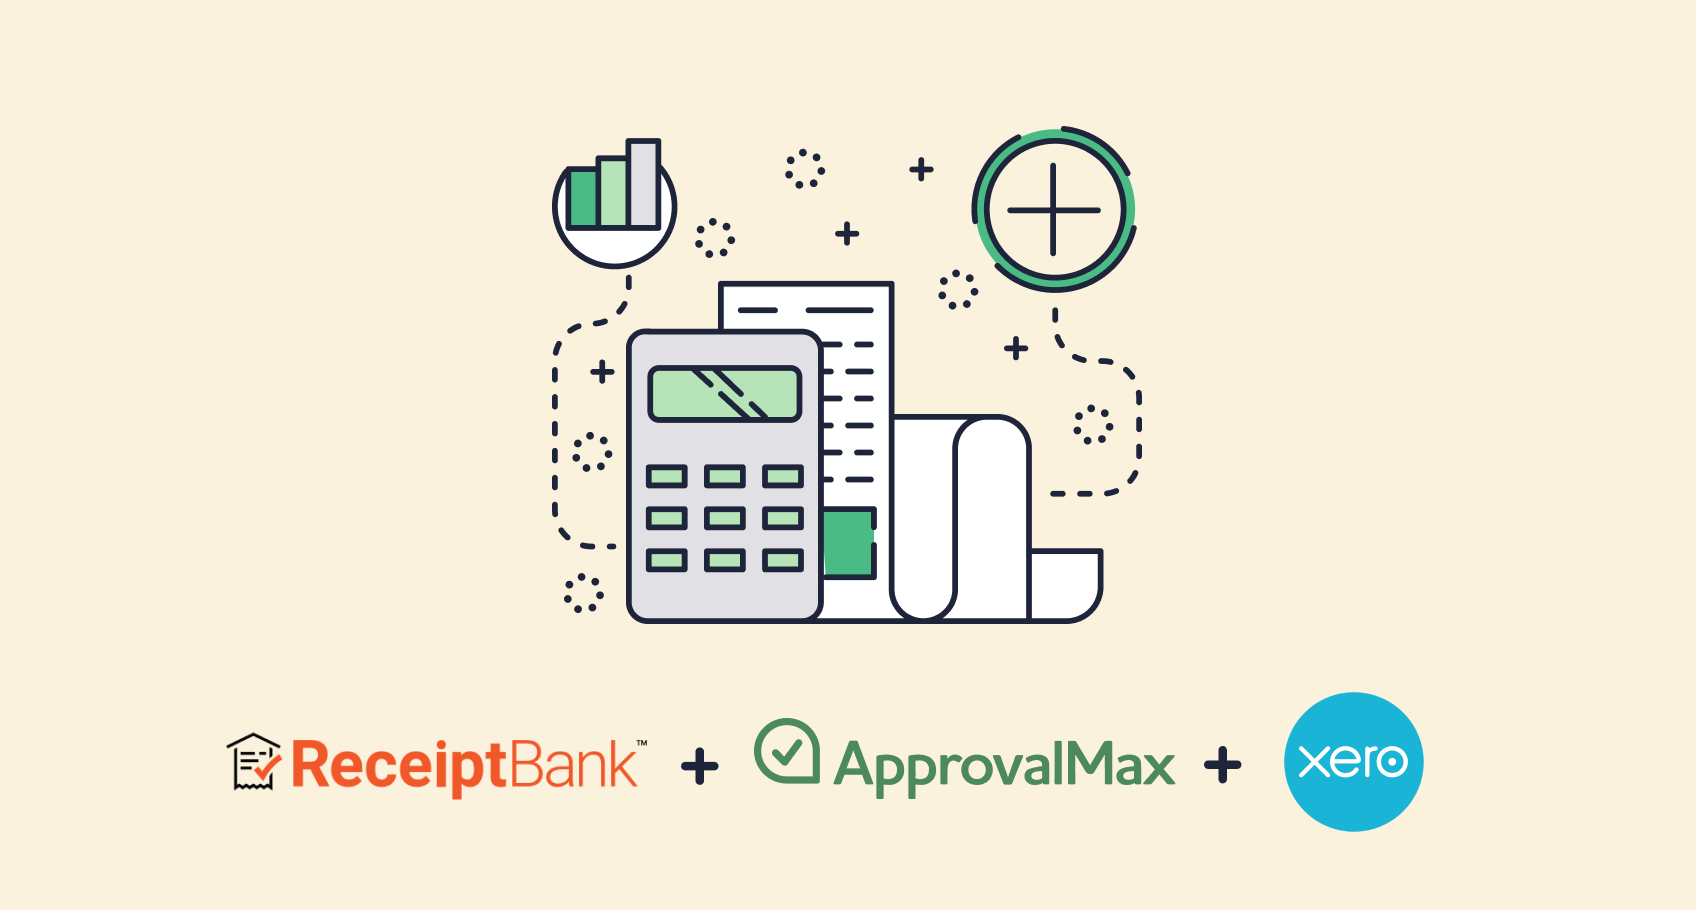 Blog_ApprovalMax+Receipt_Bank+Xero